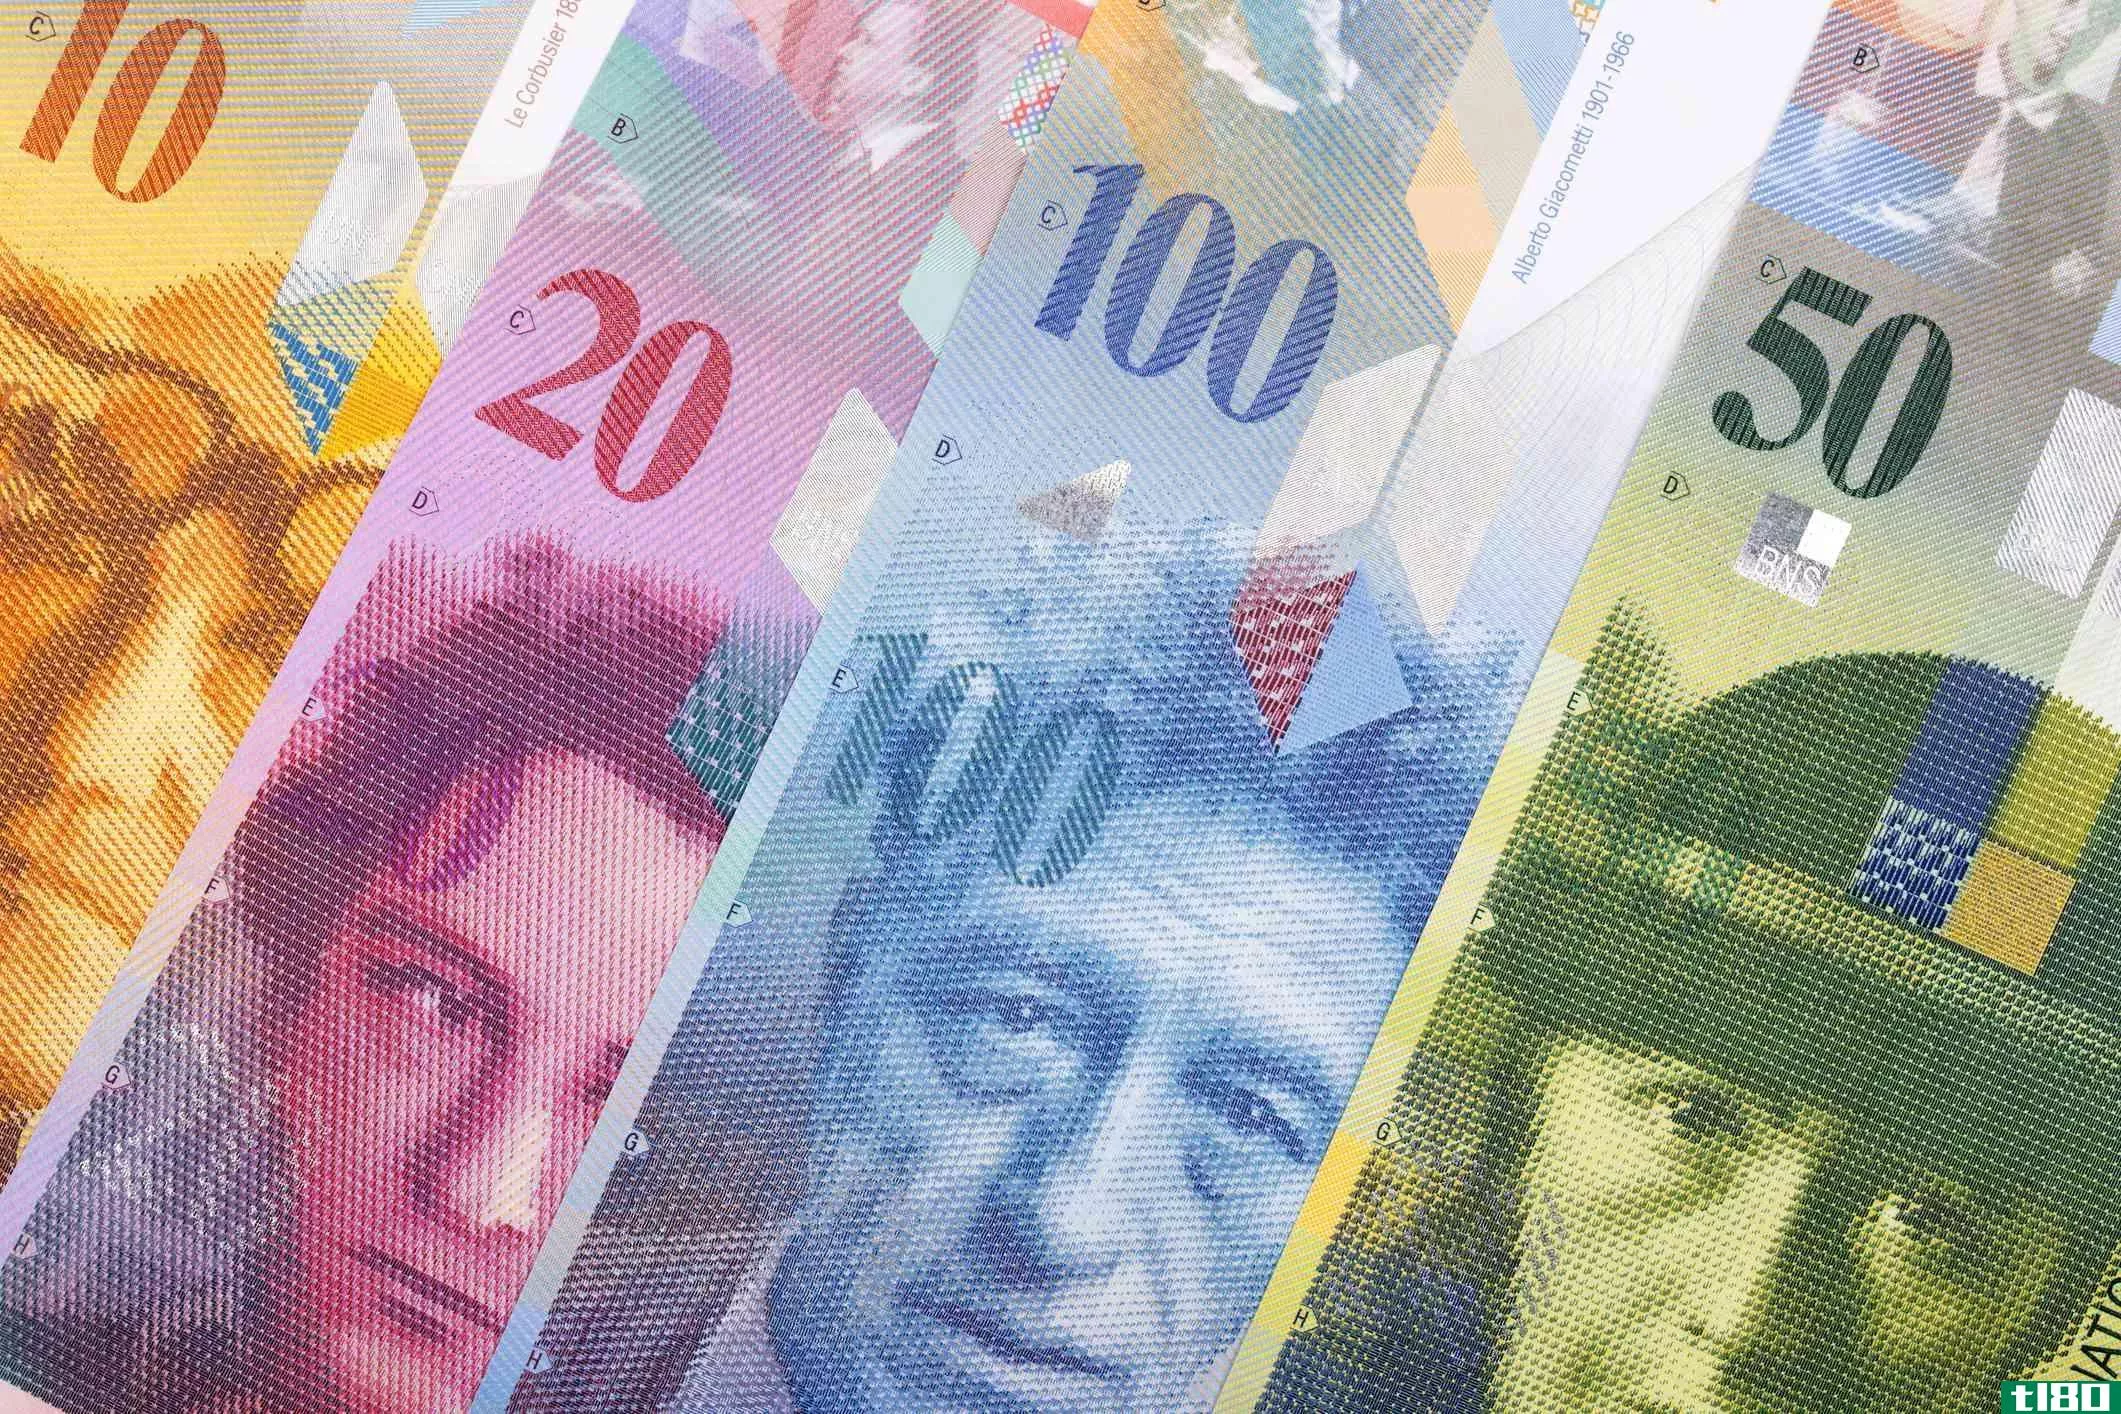 Swiss Franc Series 8